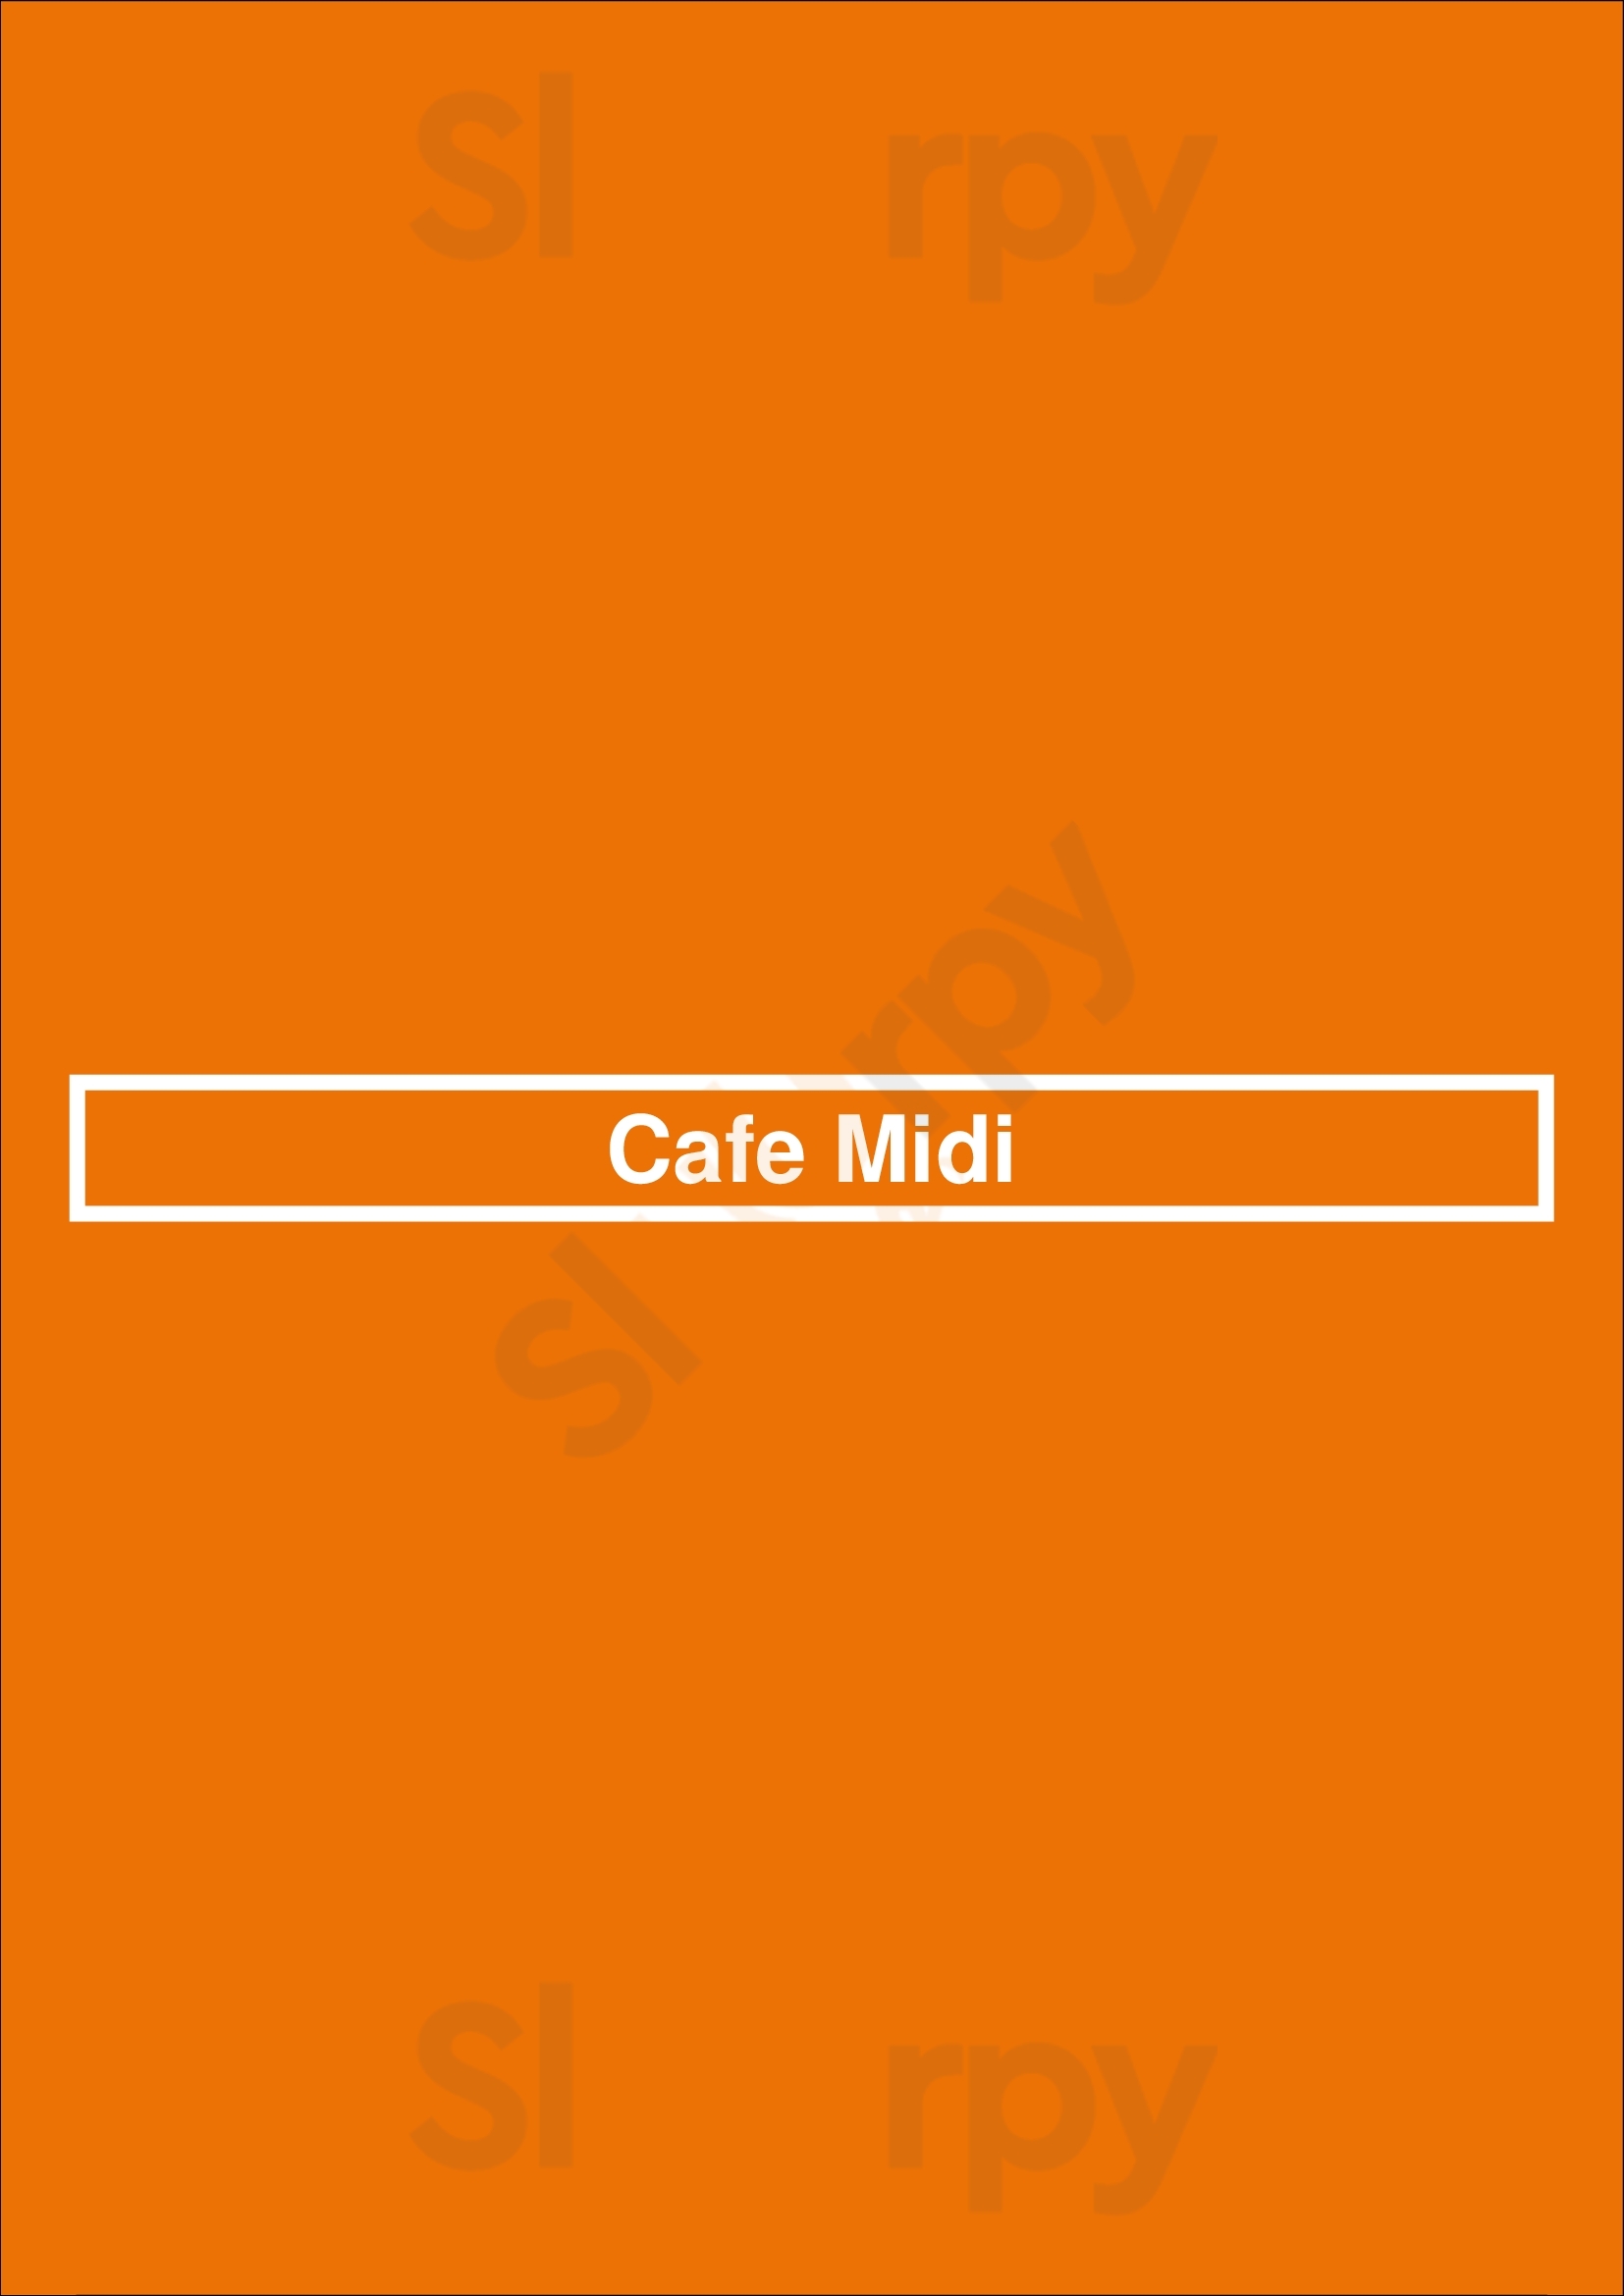 Cafe Midi Los Angeles Menu - 1